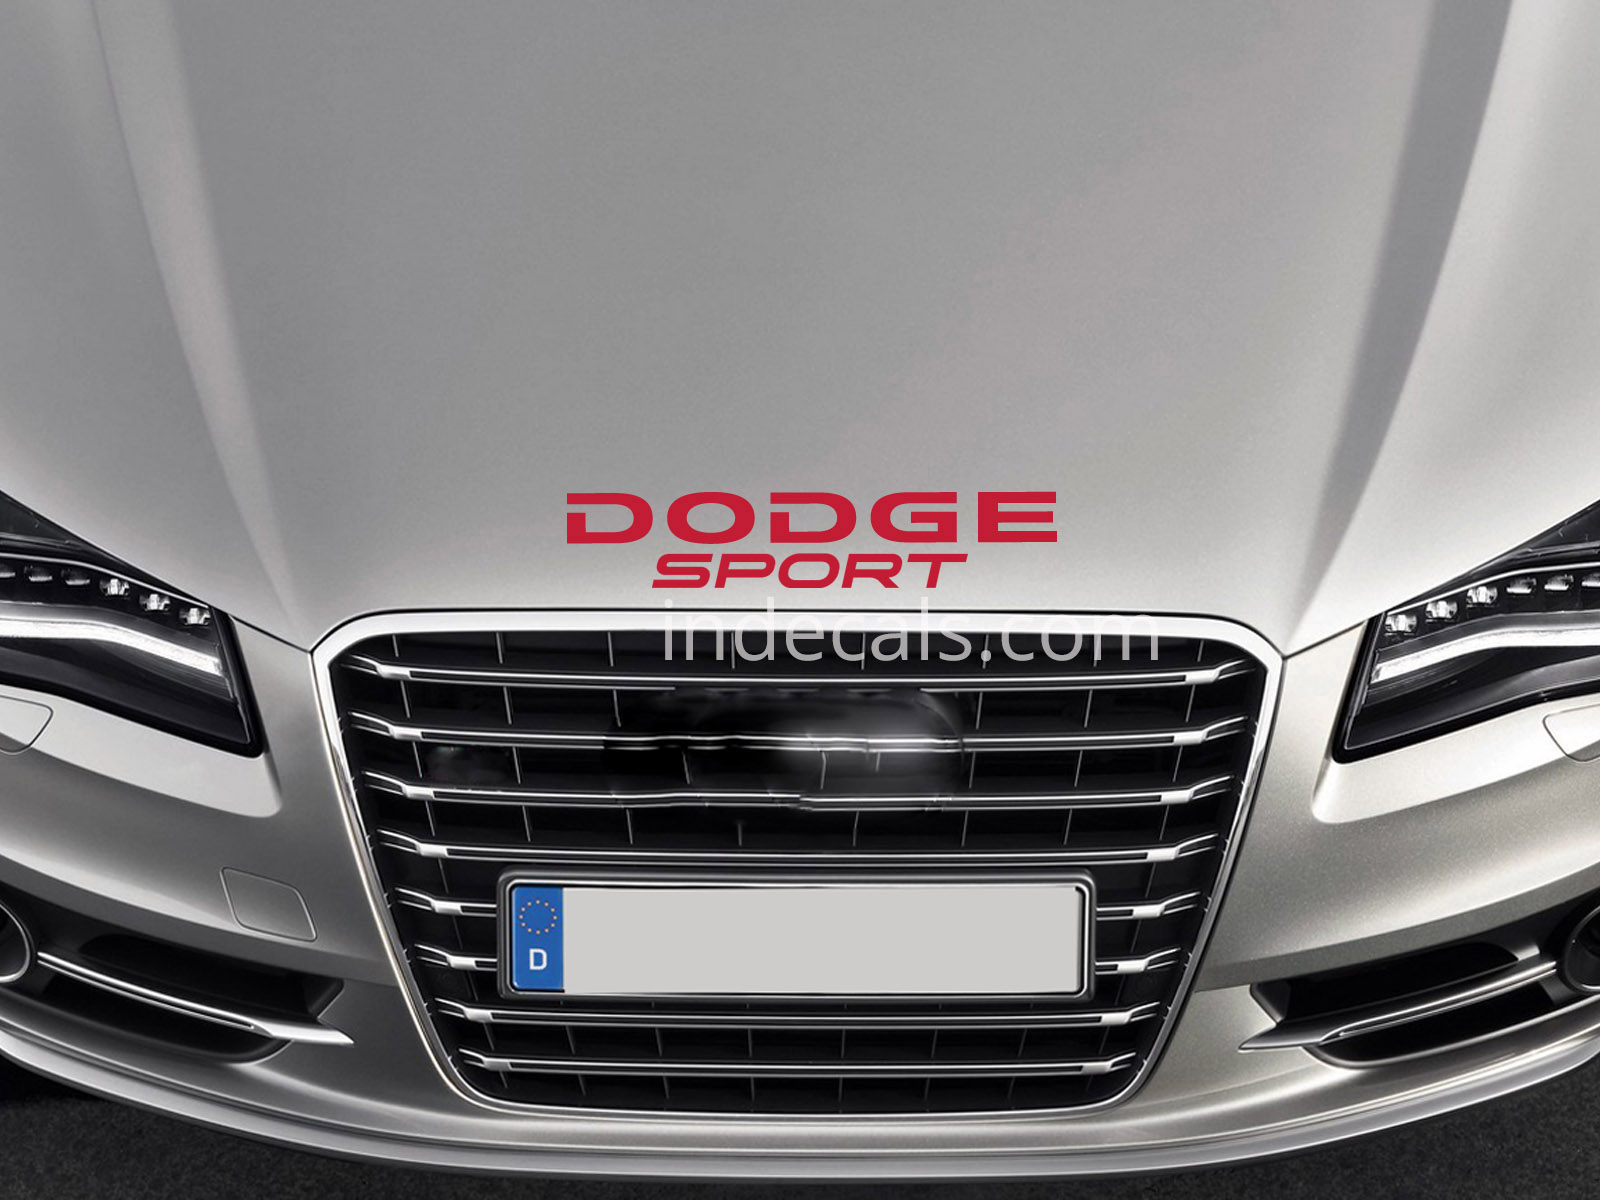 1 x Dodge Sport Sticker for Bonnet - Red